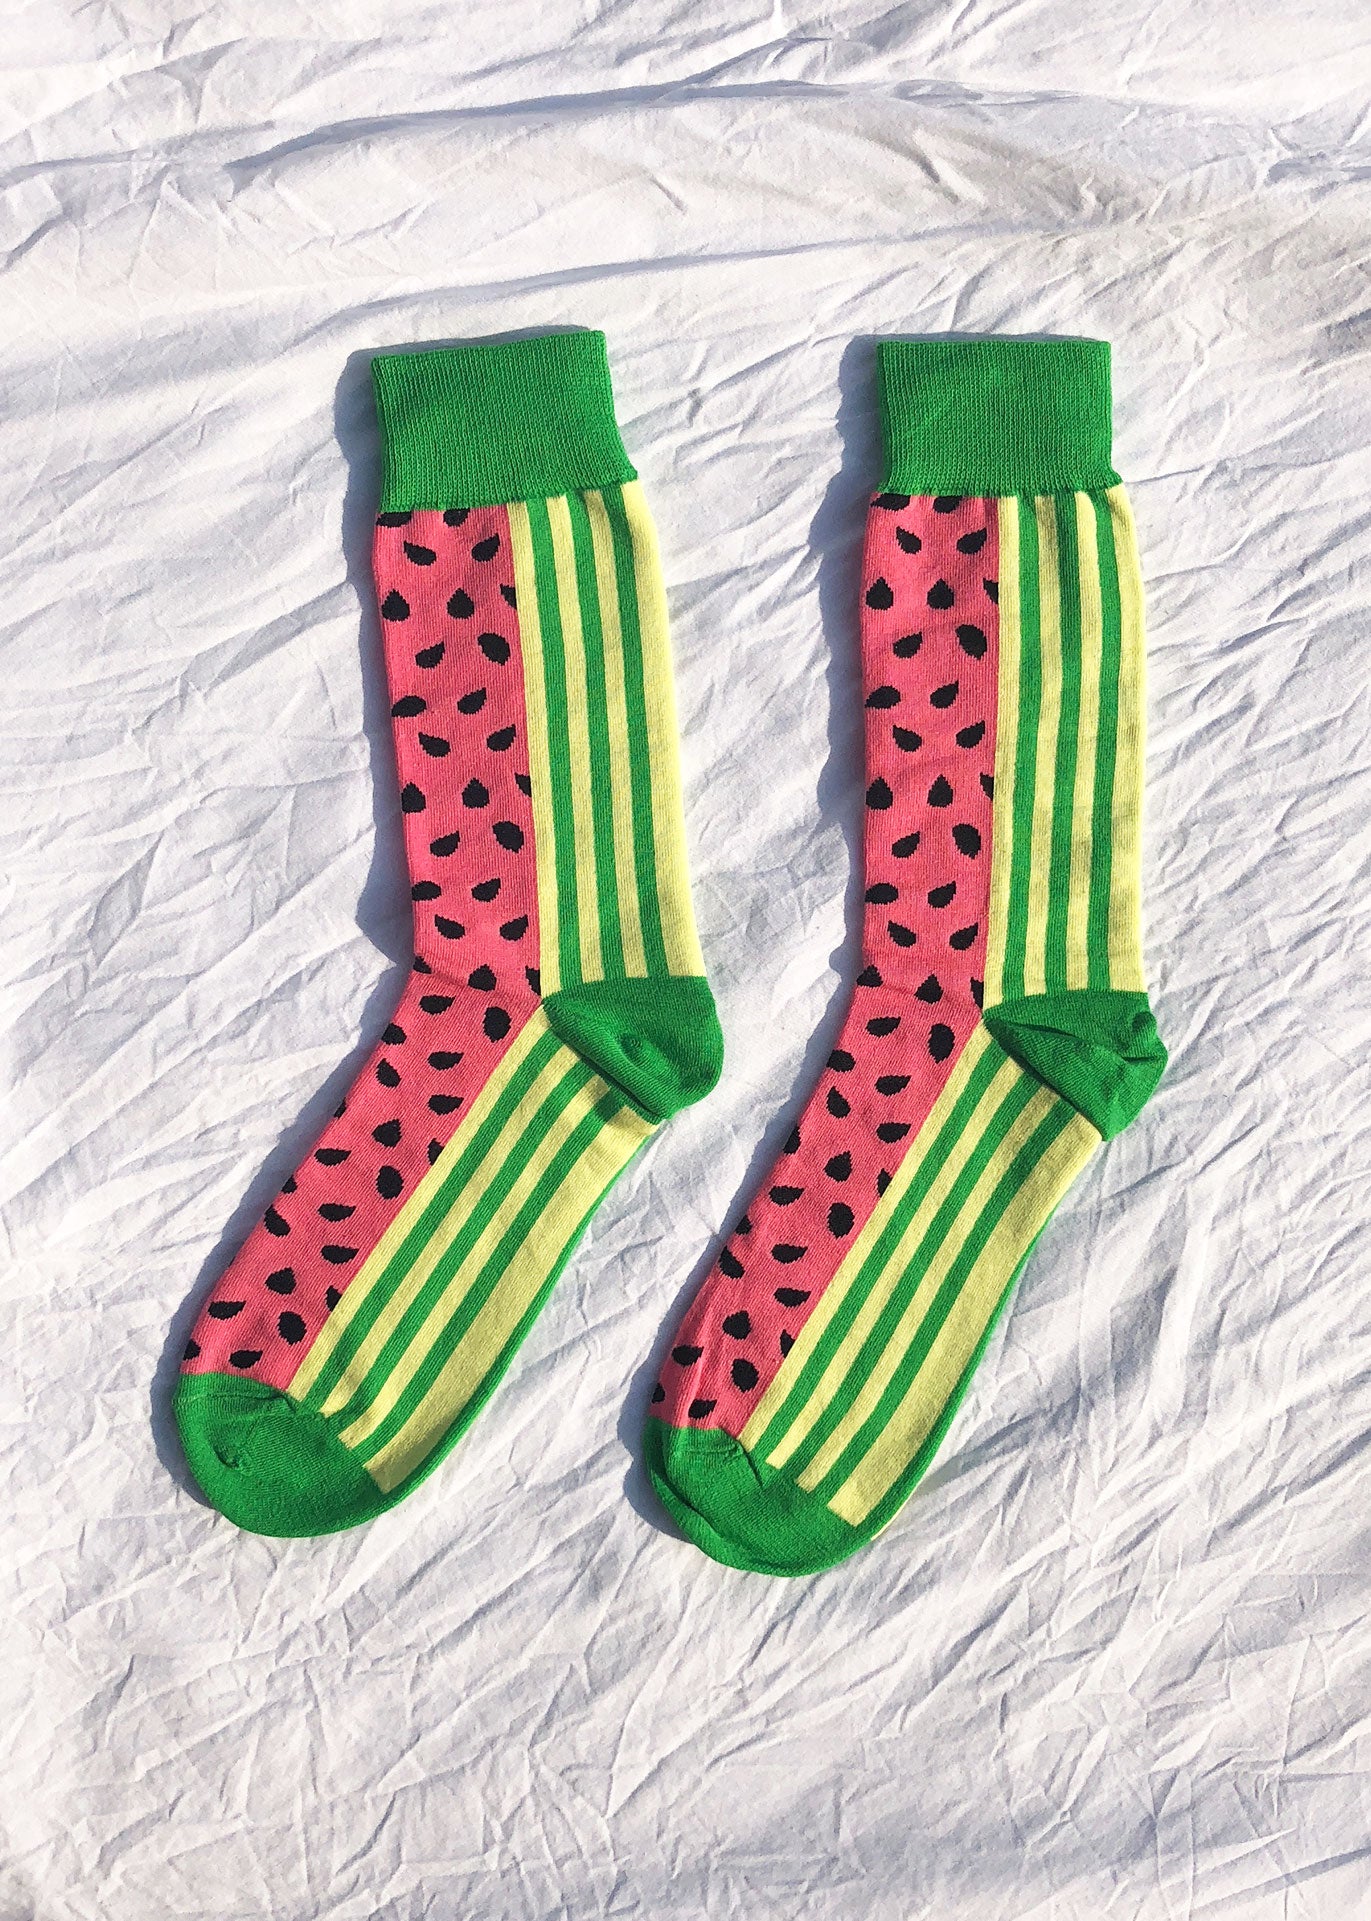 Watermelon socks